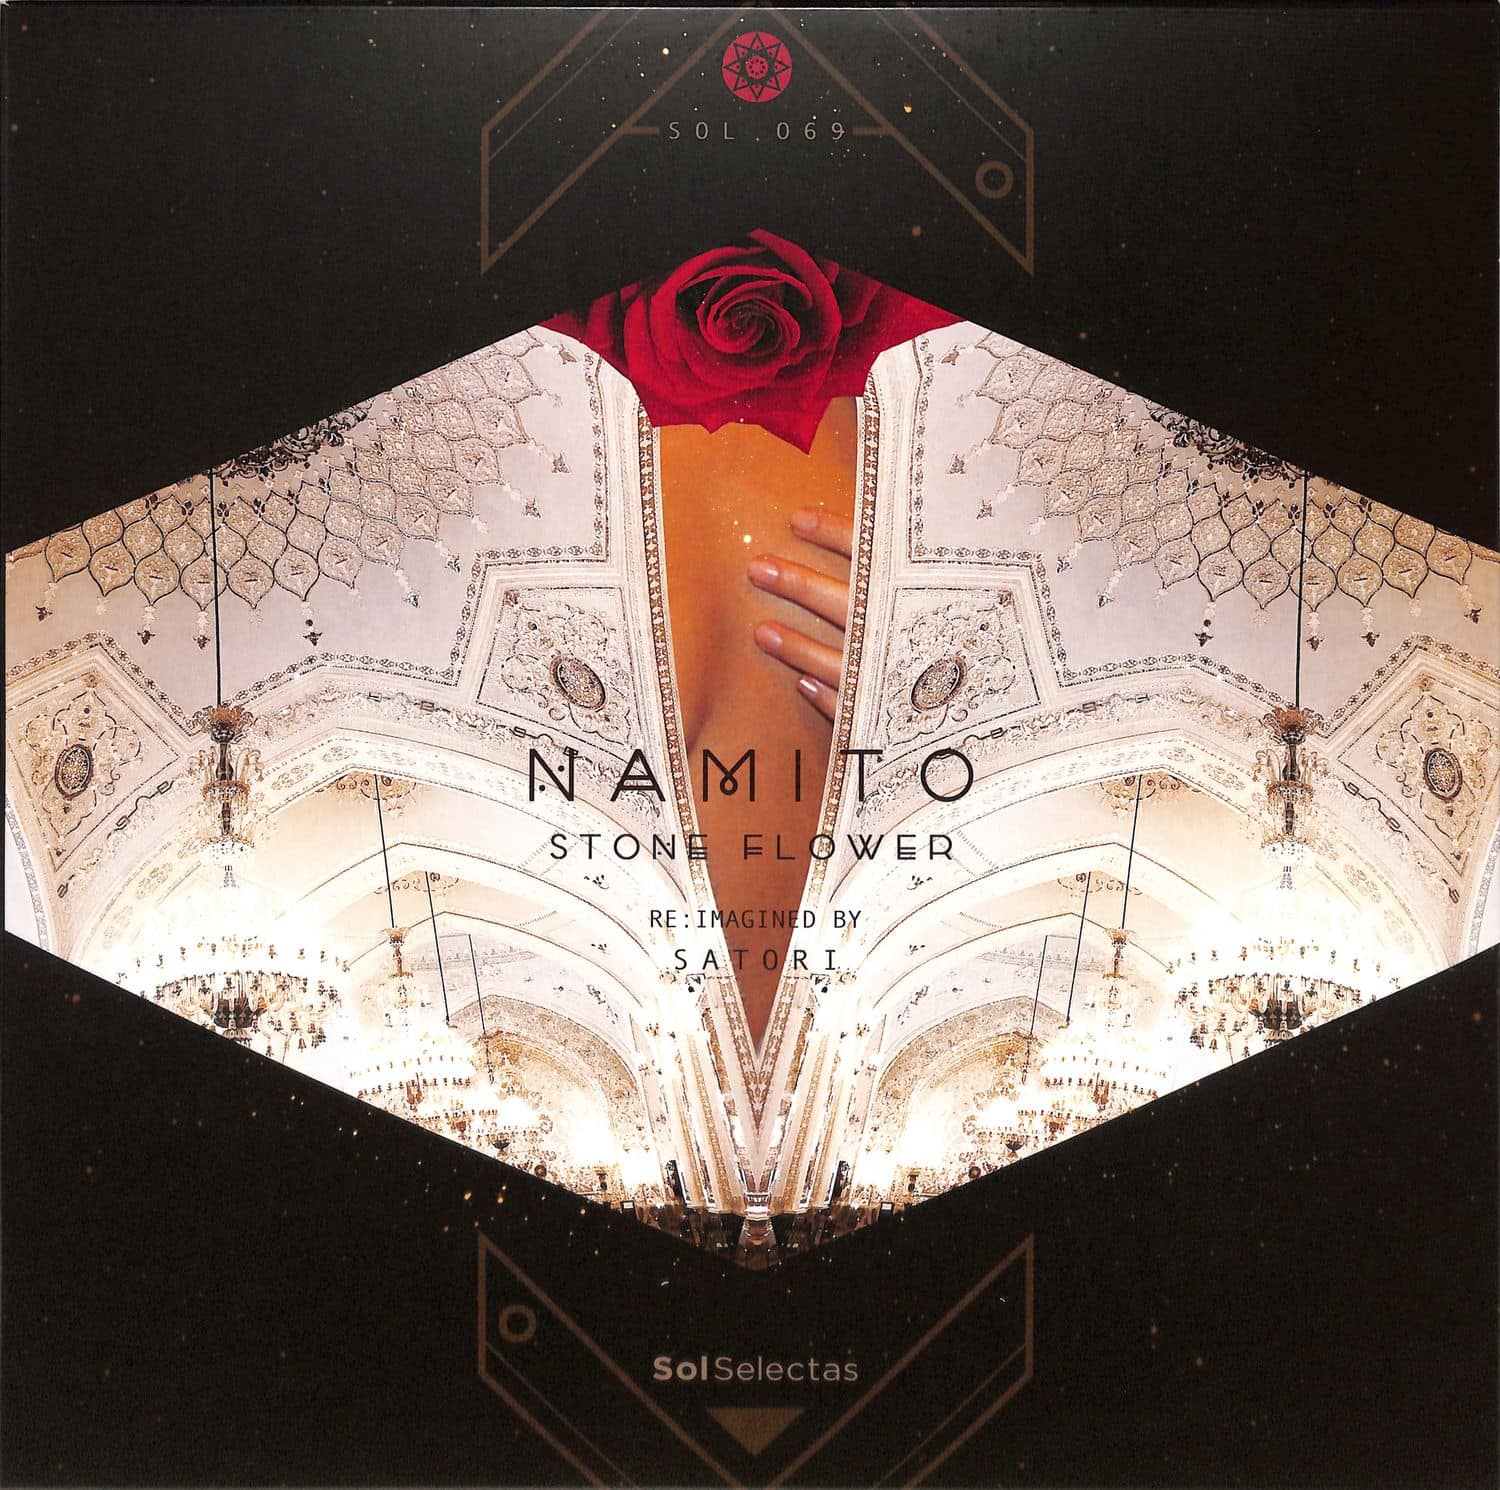 Namito - STONE FLOWER